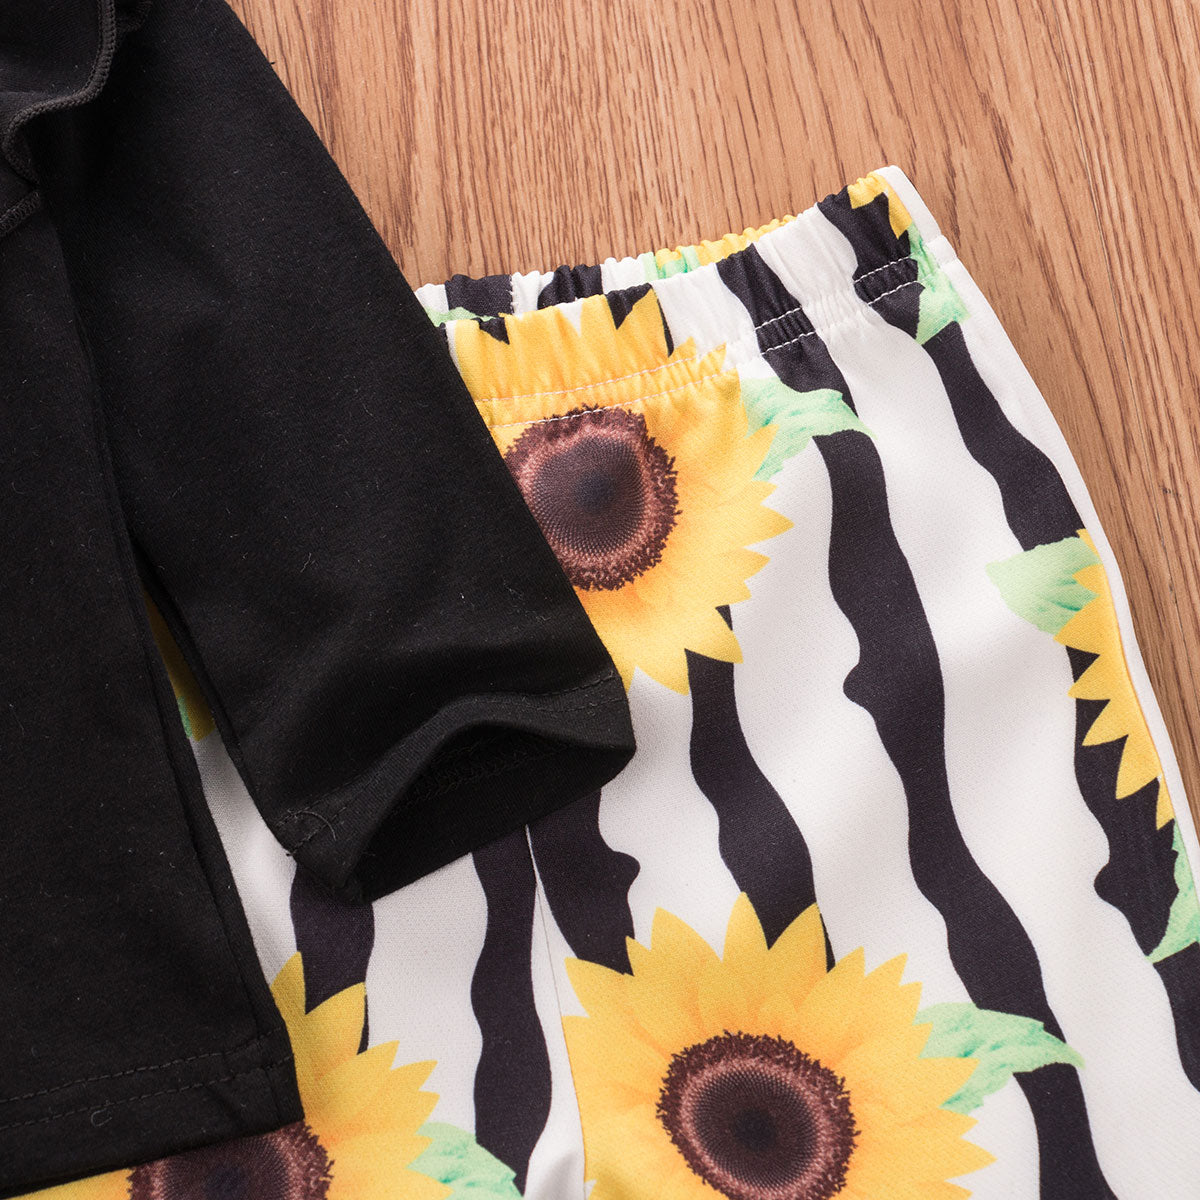 Girl Baby Girl Black Ruffle Top Sunflower Pants Set